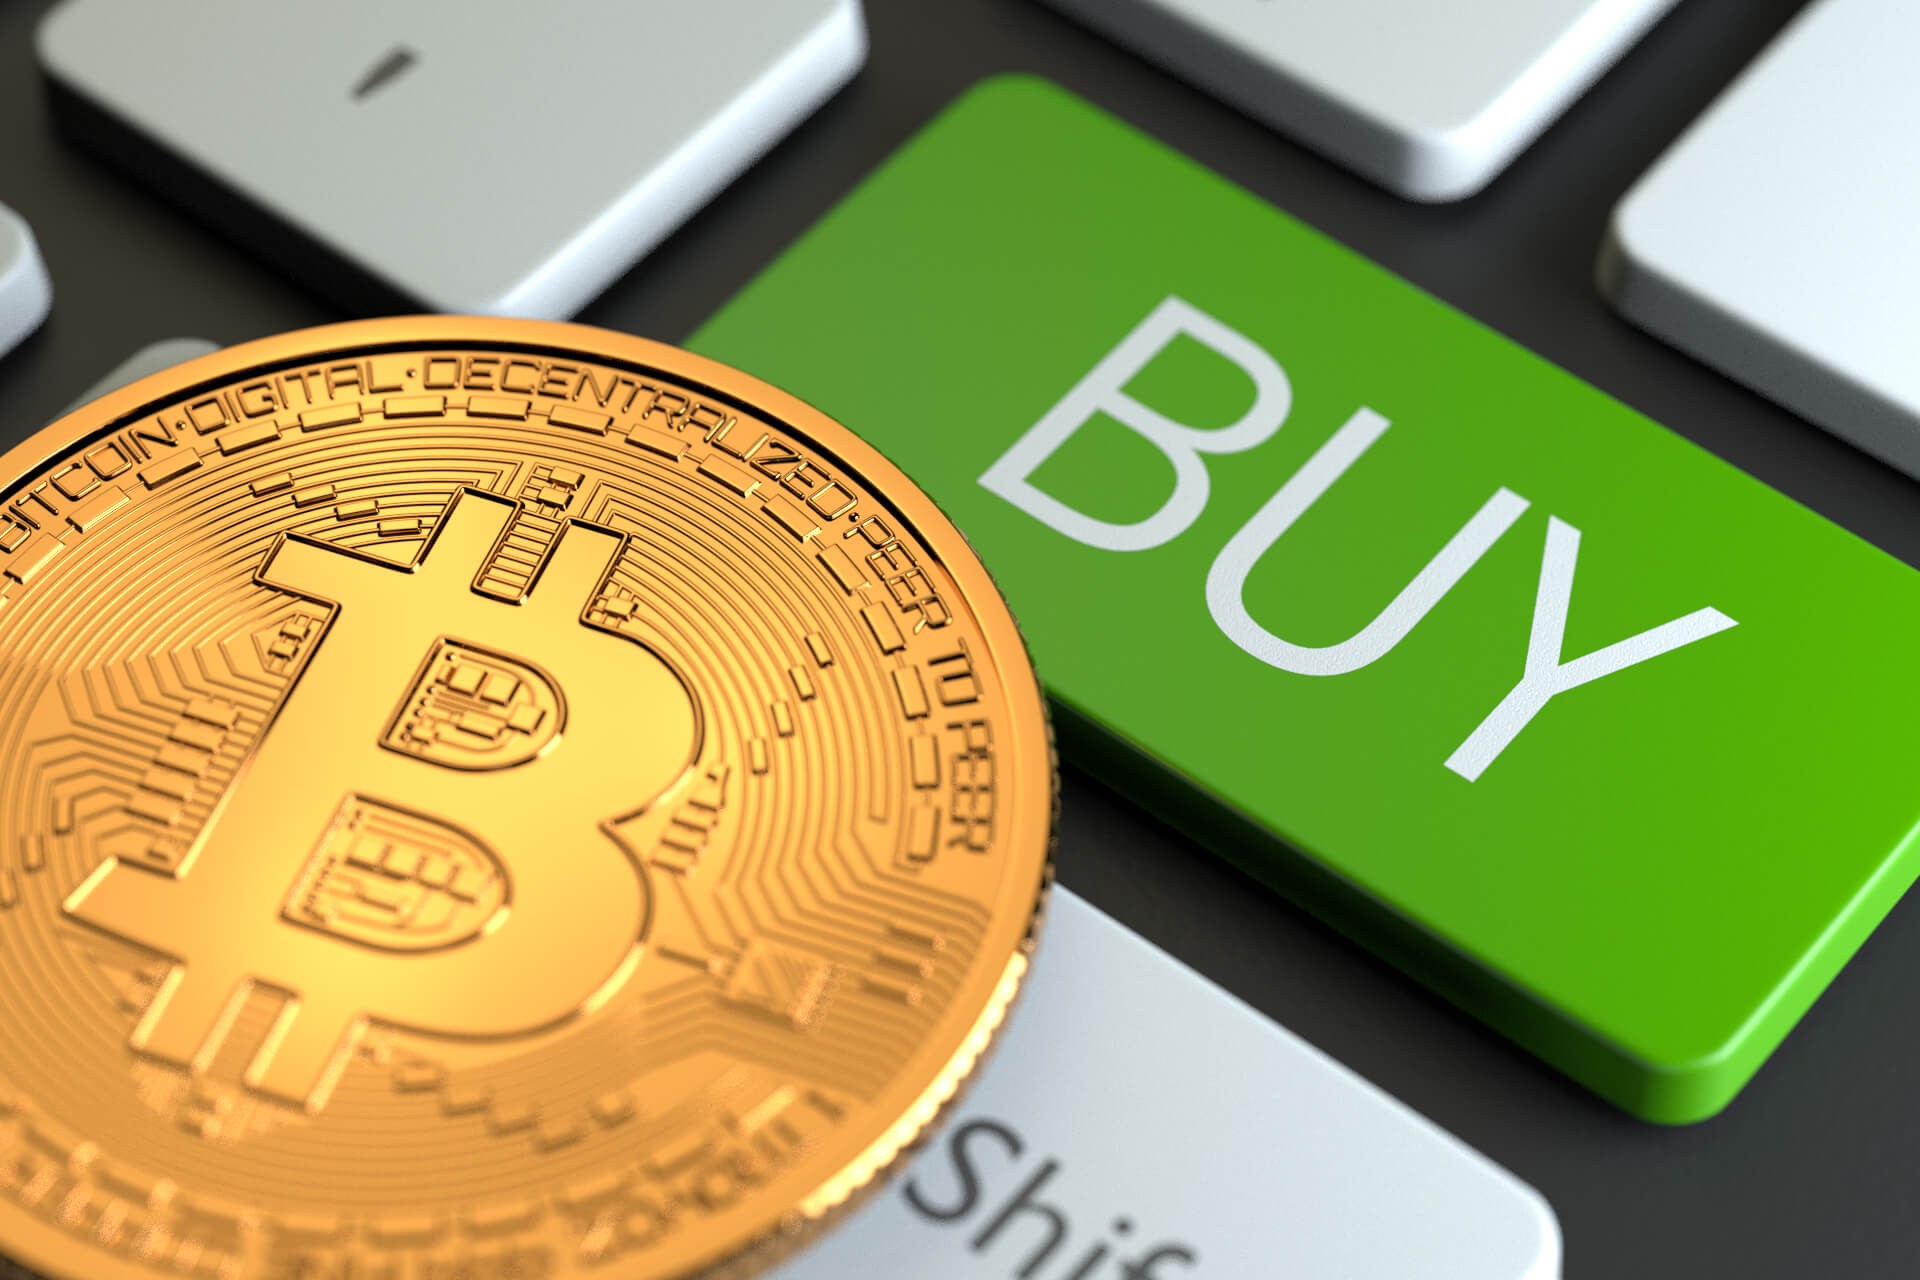 is facebook buying bitcoin